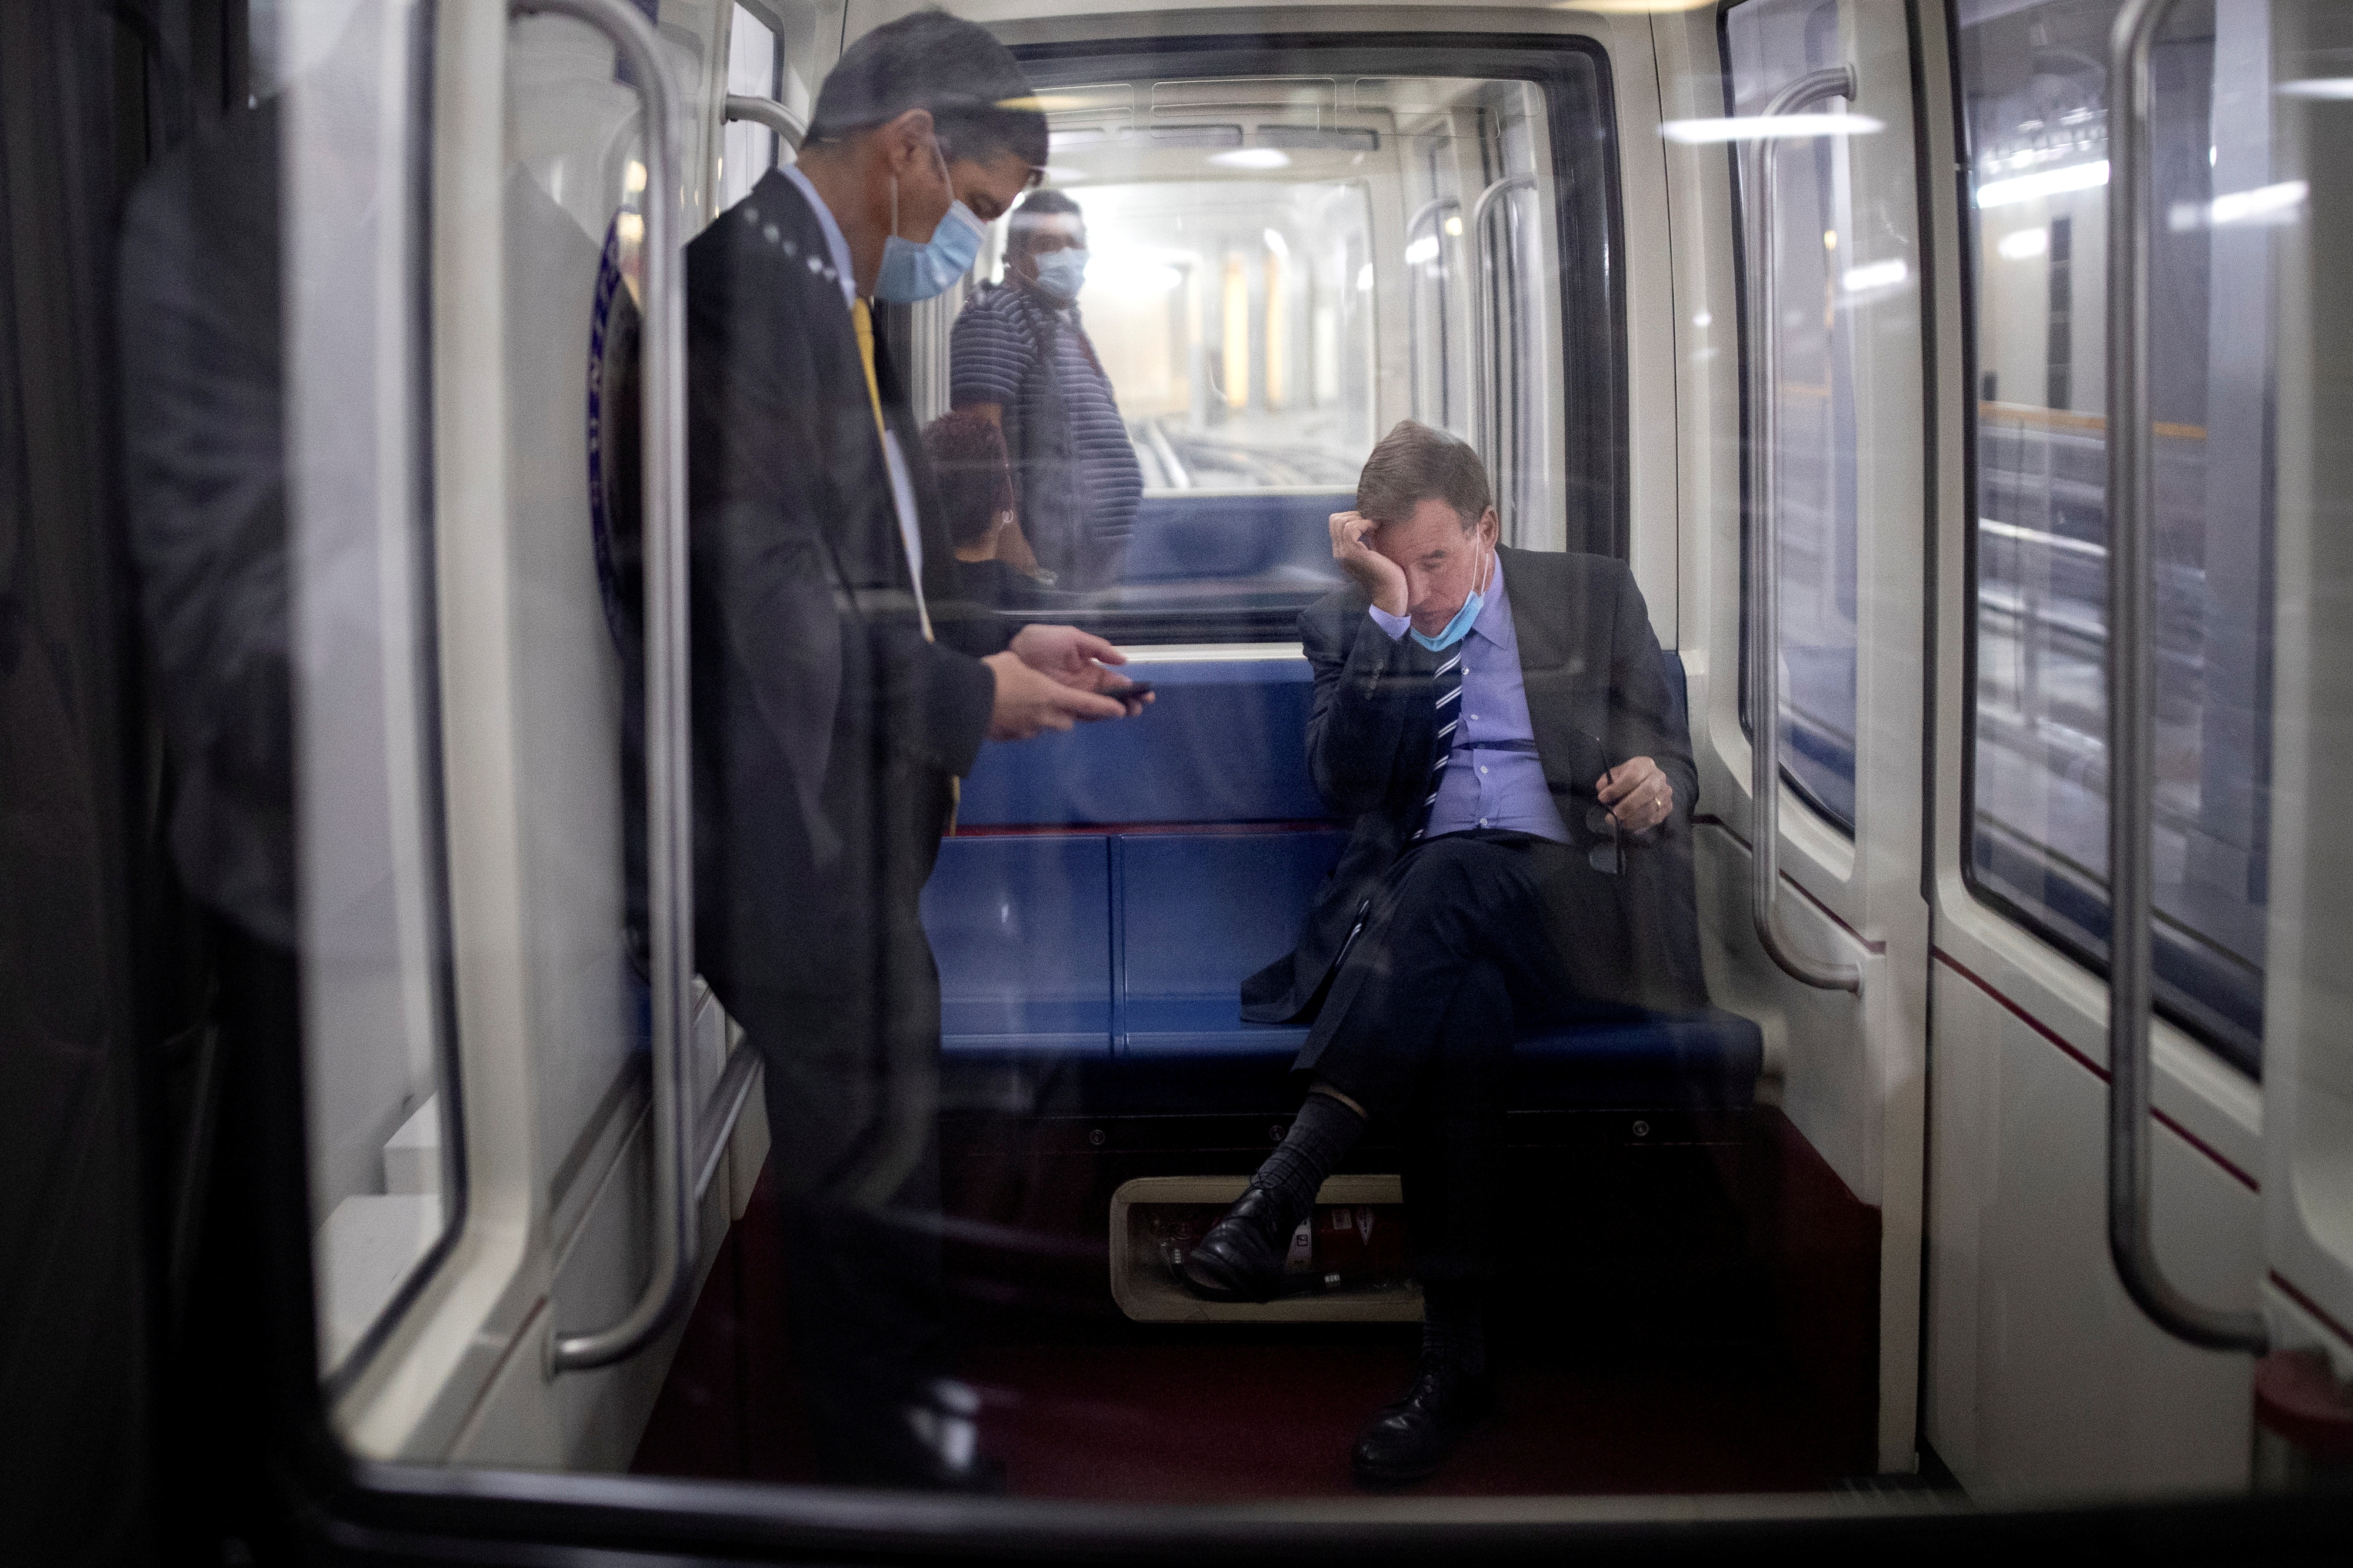 Senator Warner rides the Senate Subway following a vote on Capitol Hill in Washington